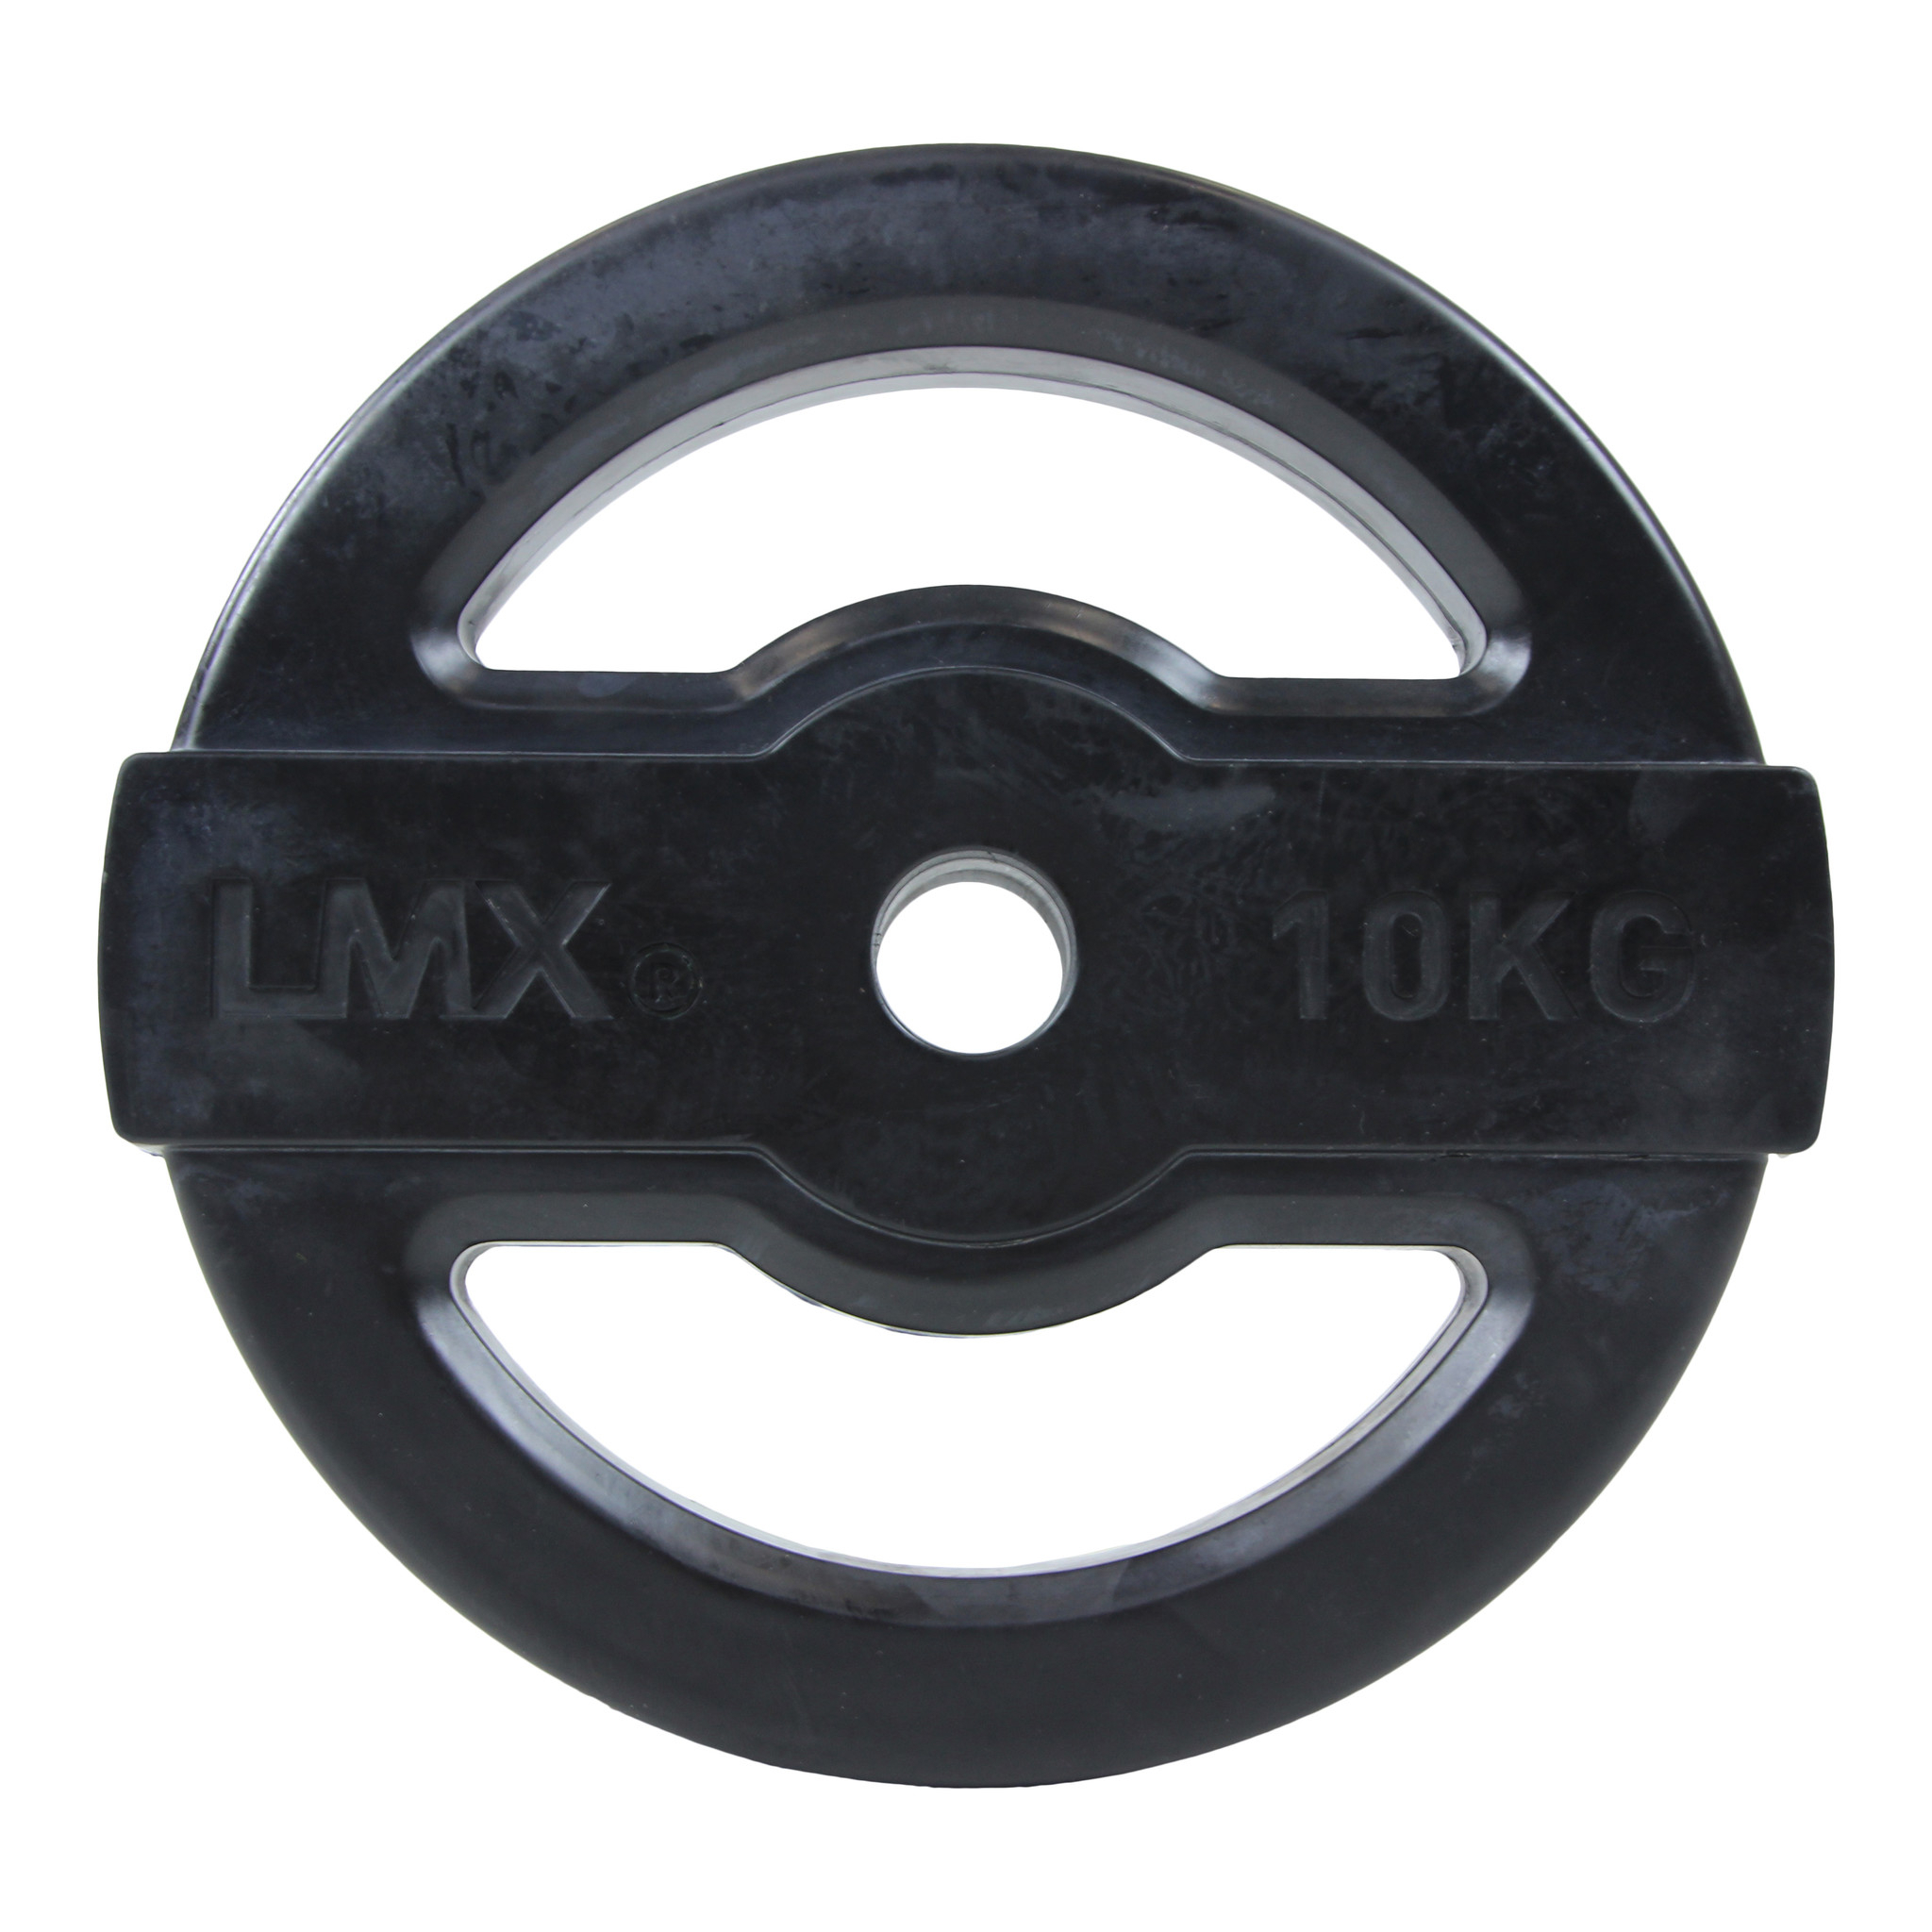 Lifemaxx LMX Studio pump schijven l 5kg l zwart